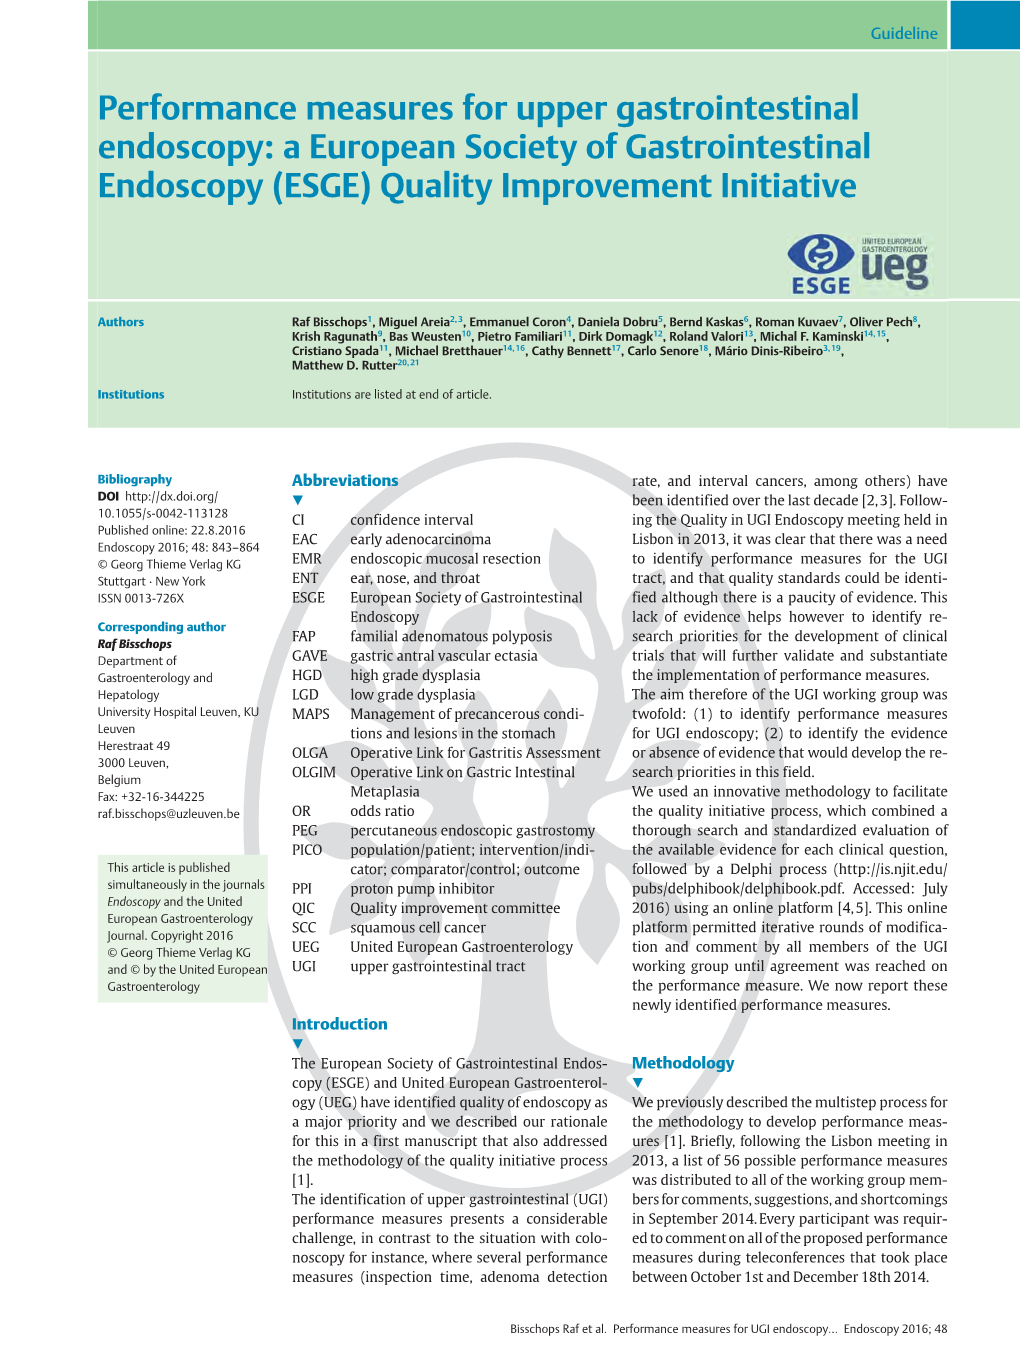 Performance Measures for Upper Gastrointestinal Endoscopy: a European Society of Gastrointestinal Endoscopy (ESGE) Quality Improvement Initiative